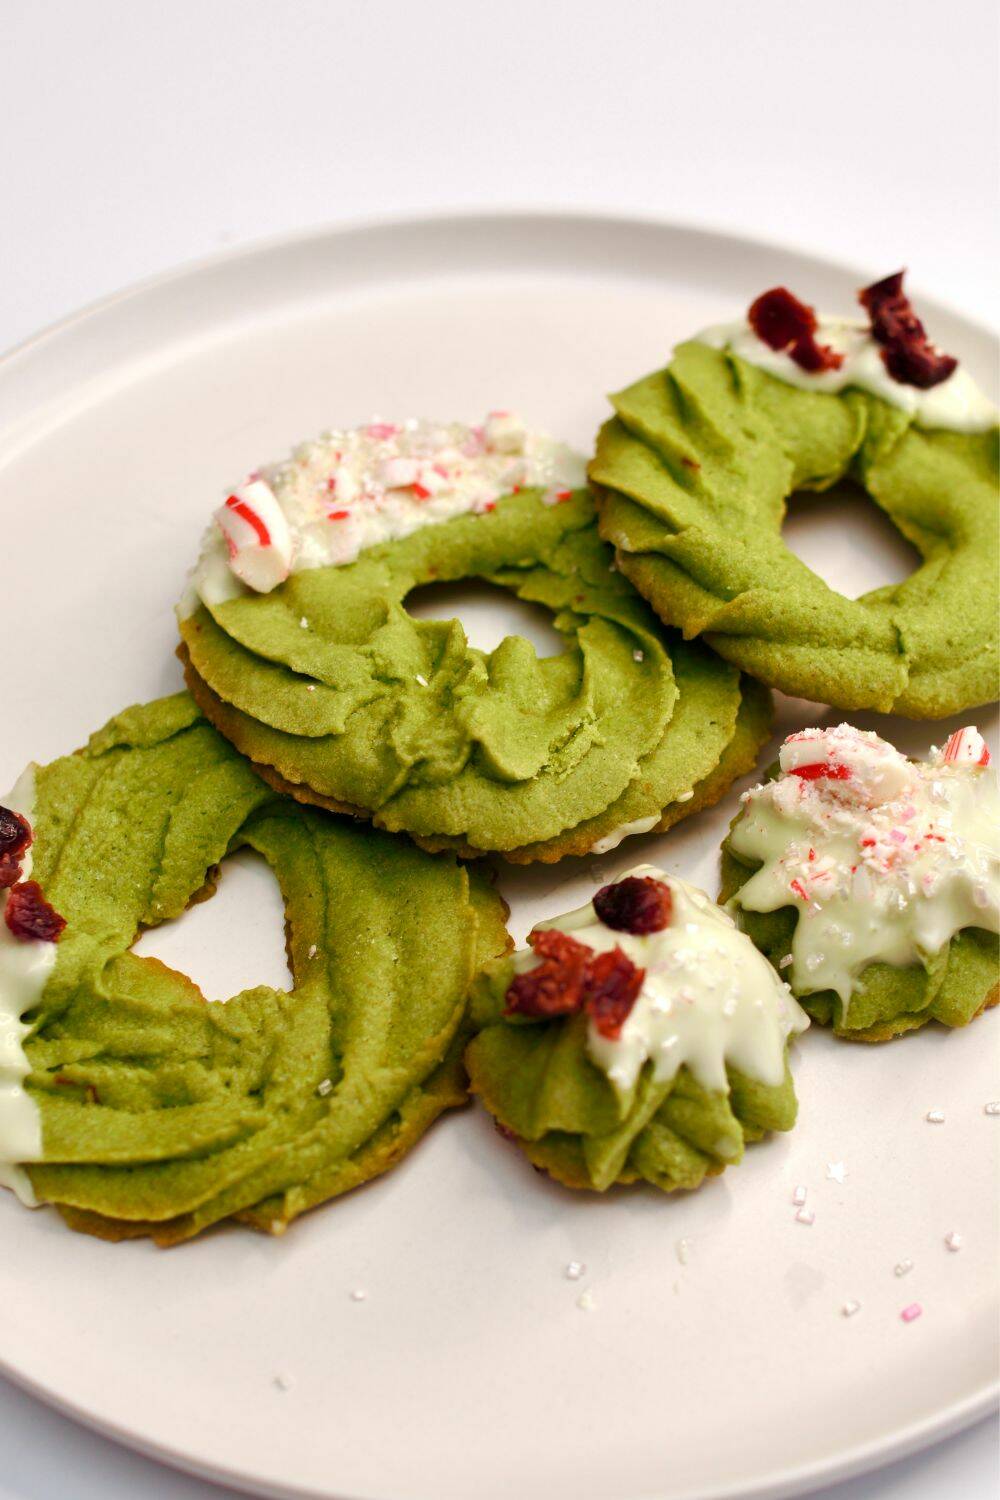 Photo by Kat Lieu
Miso Matcha Wreath Cookies (Matcha Spritz Cookies)